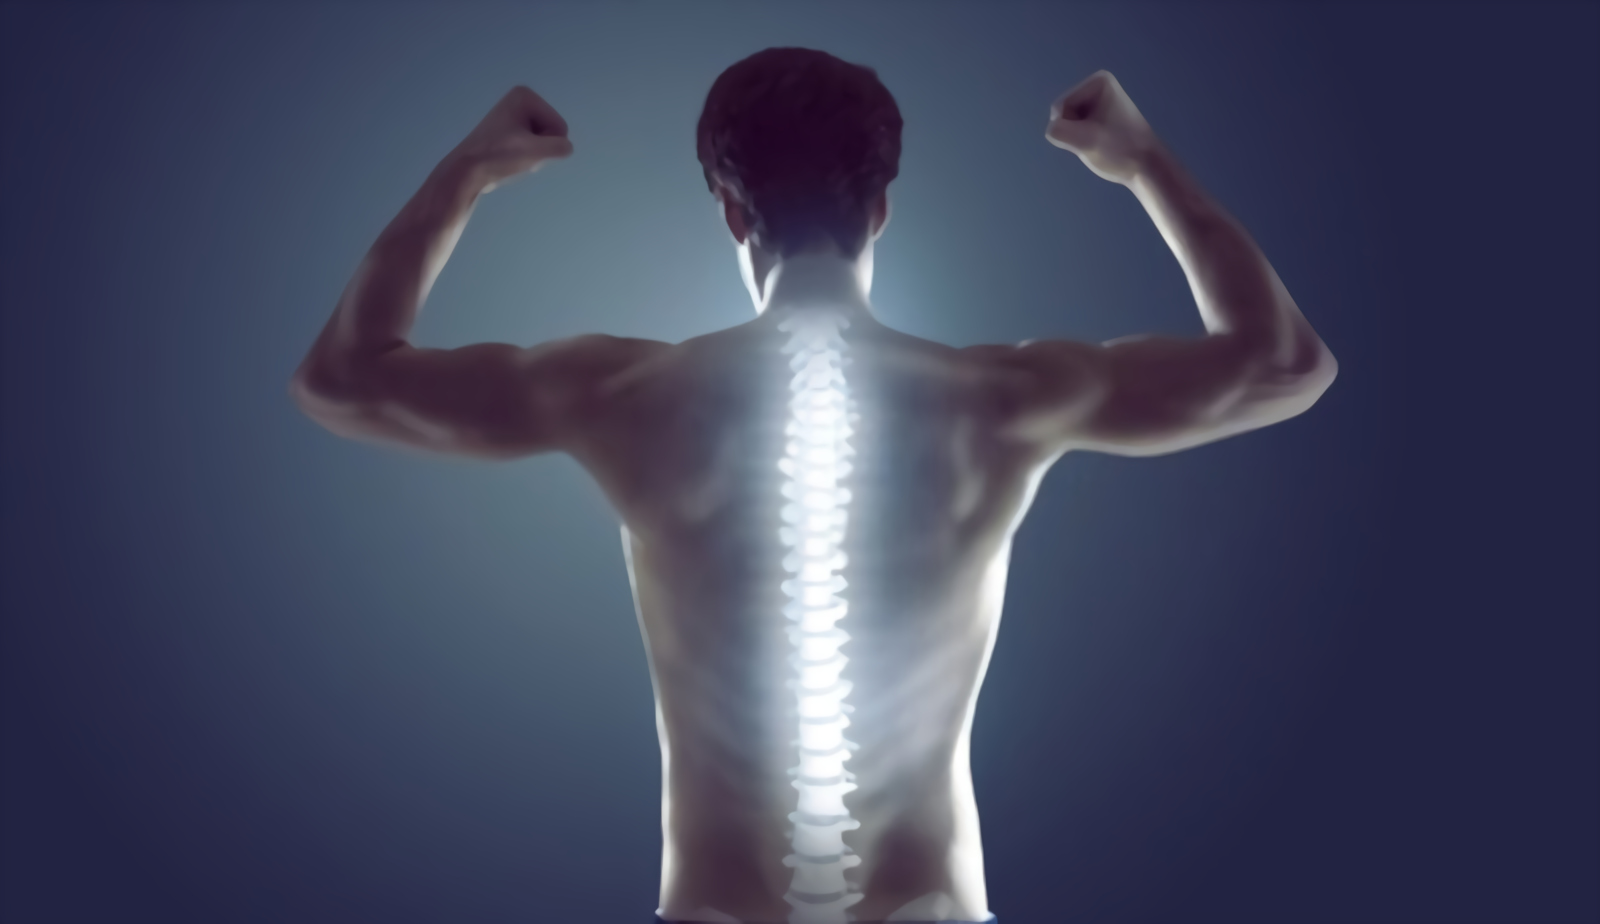 Exercises for spine health